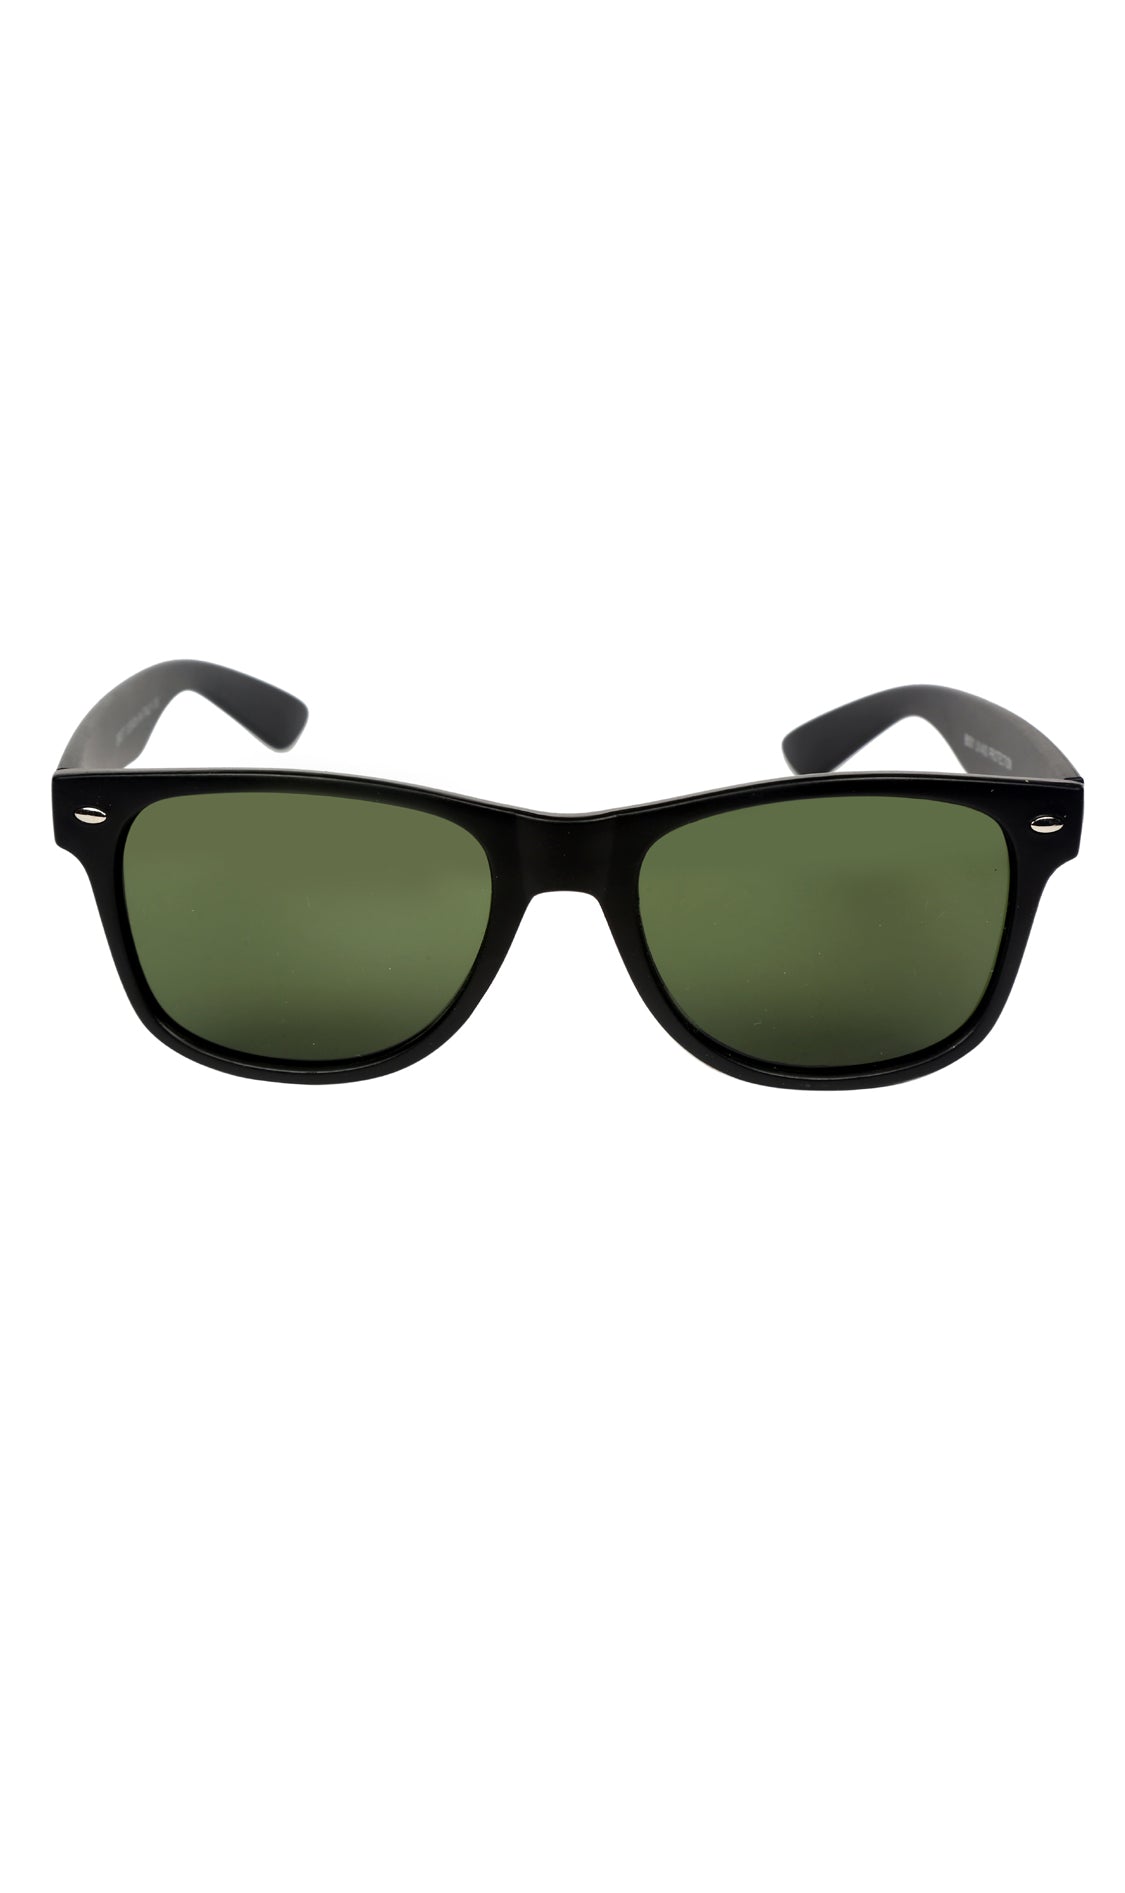 Jodykoes® Stylish Looking Fashionable UV Protection Sunglasses Wayfare Shape Eyeshades For Men and Women (Green) - Jodykoes ®